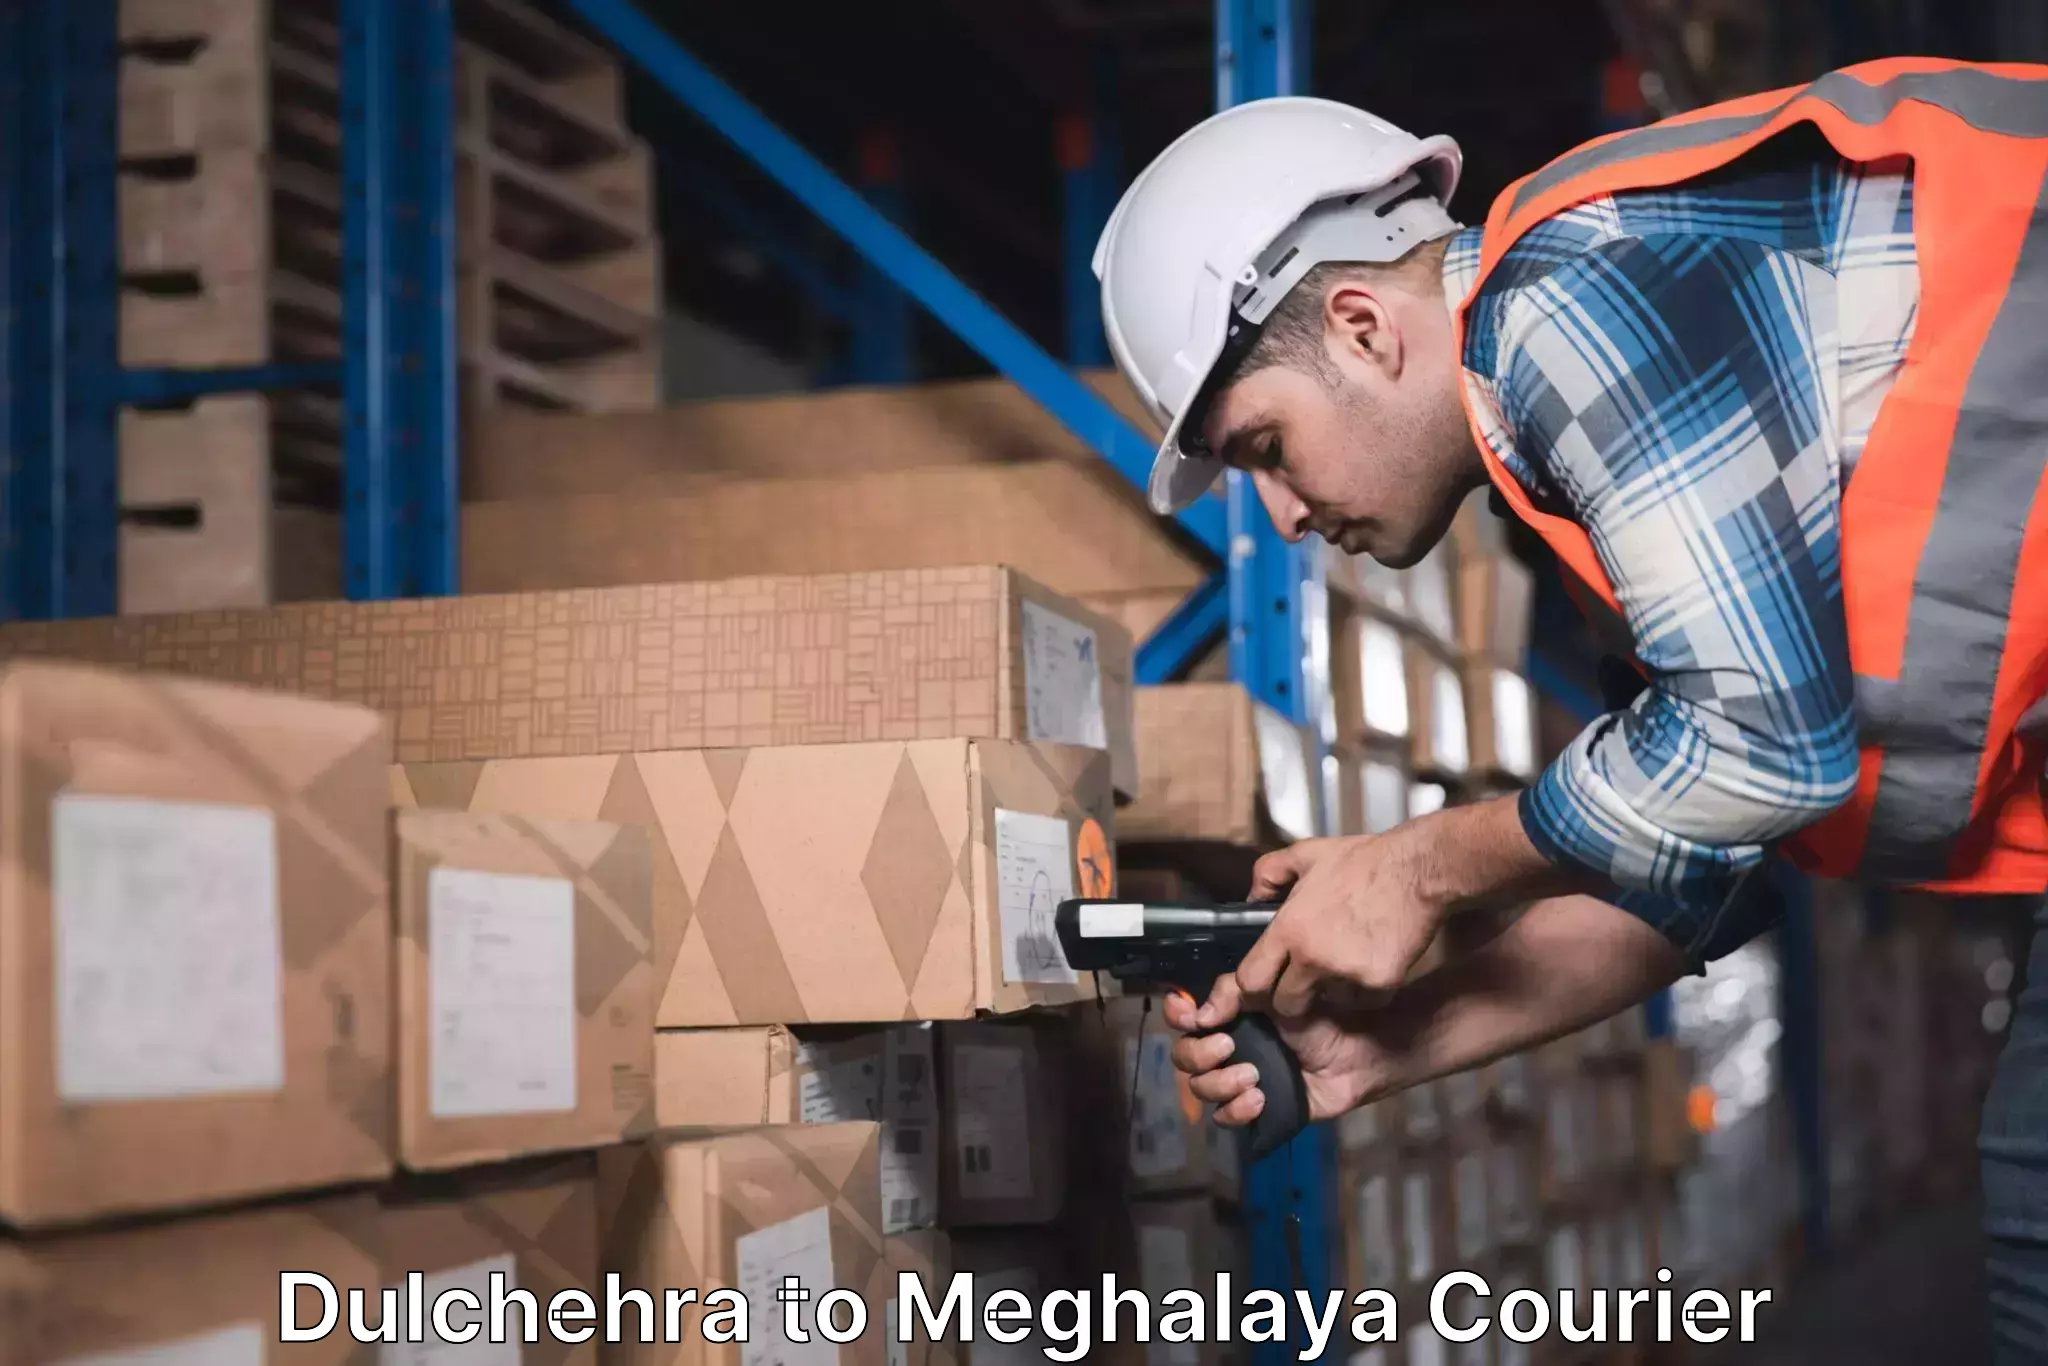 Courier service comparison Dulchehra to Cherrapunji